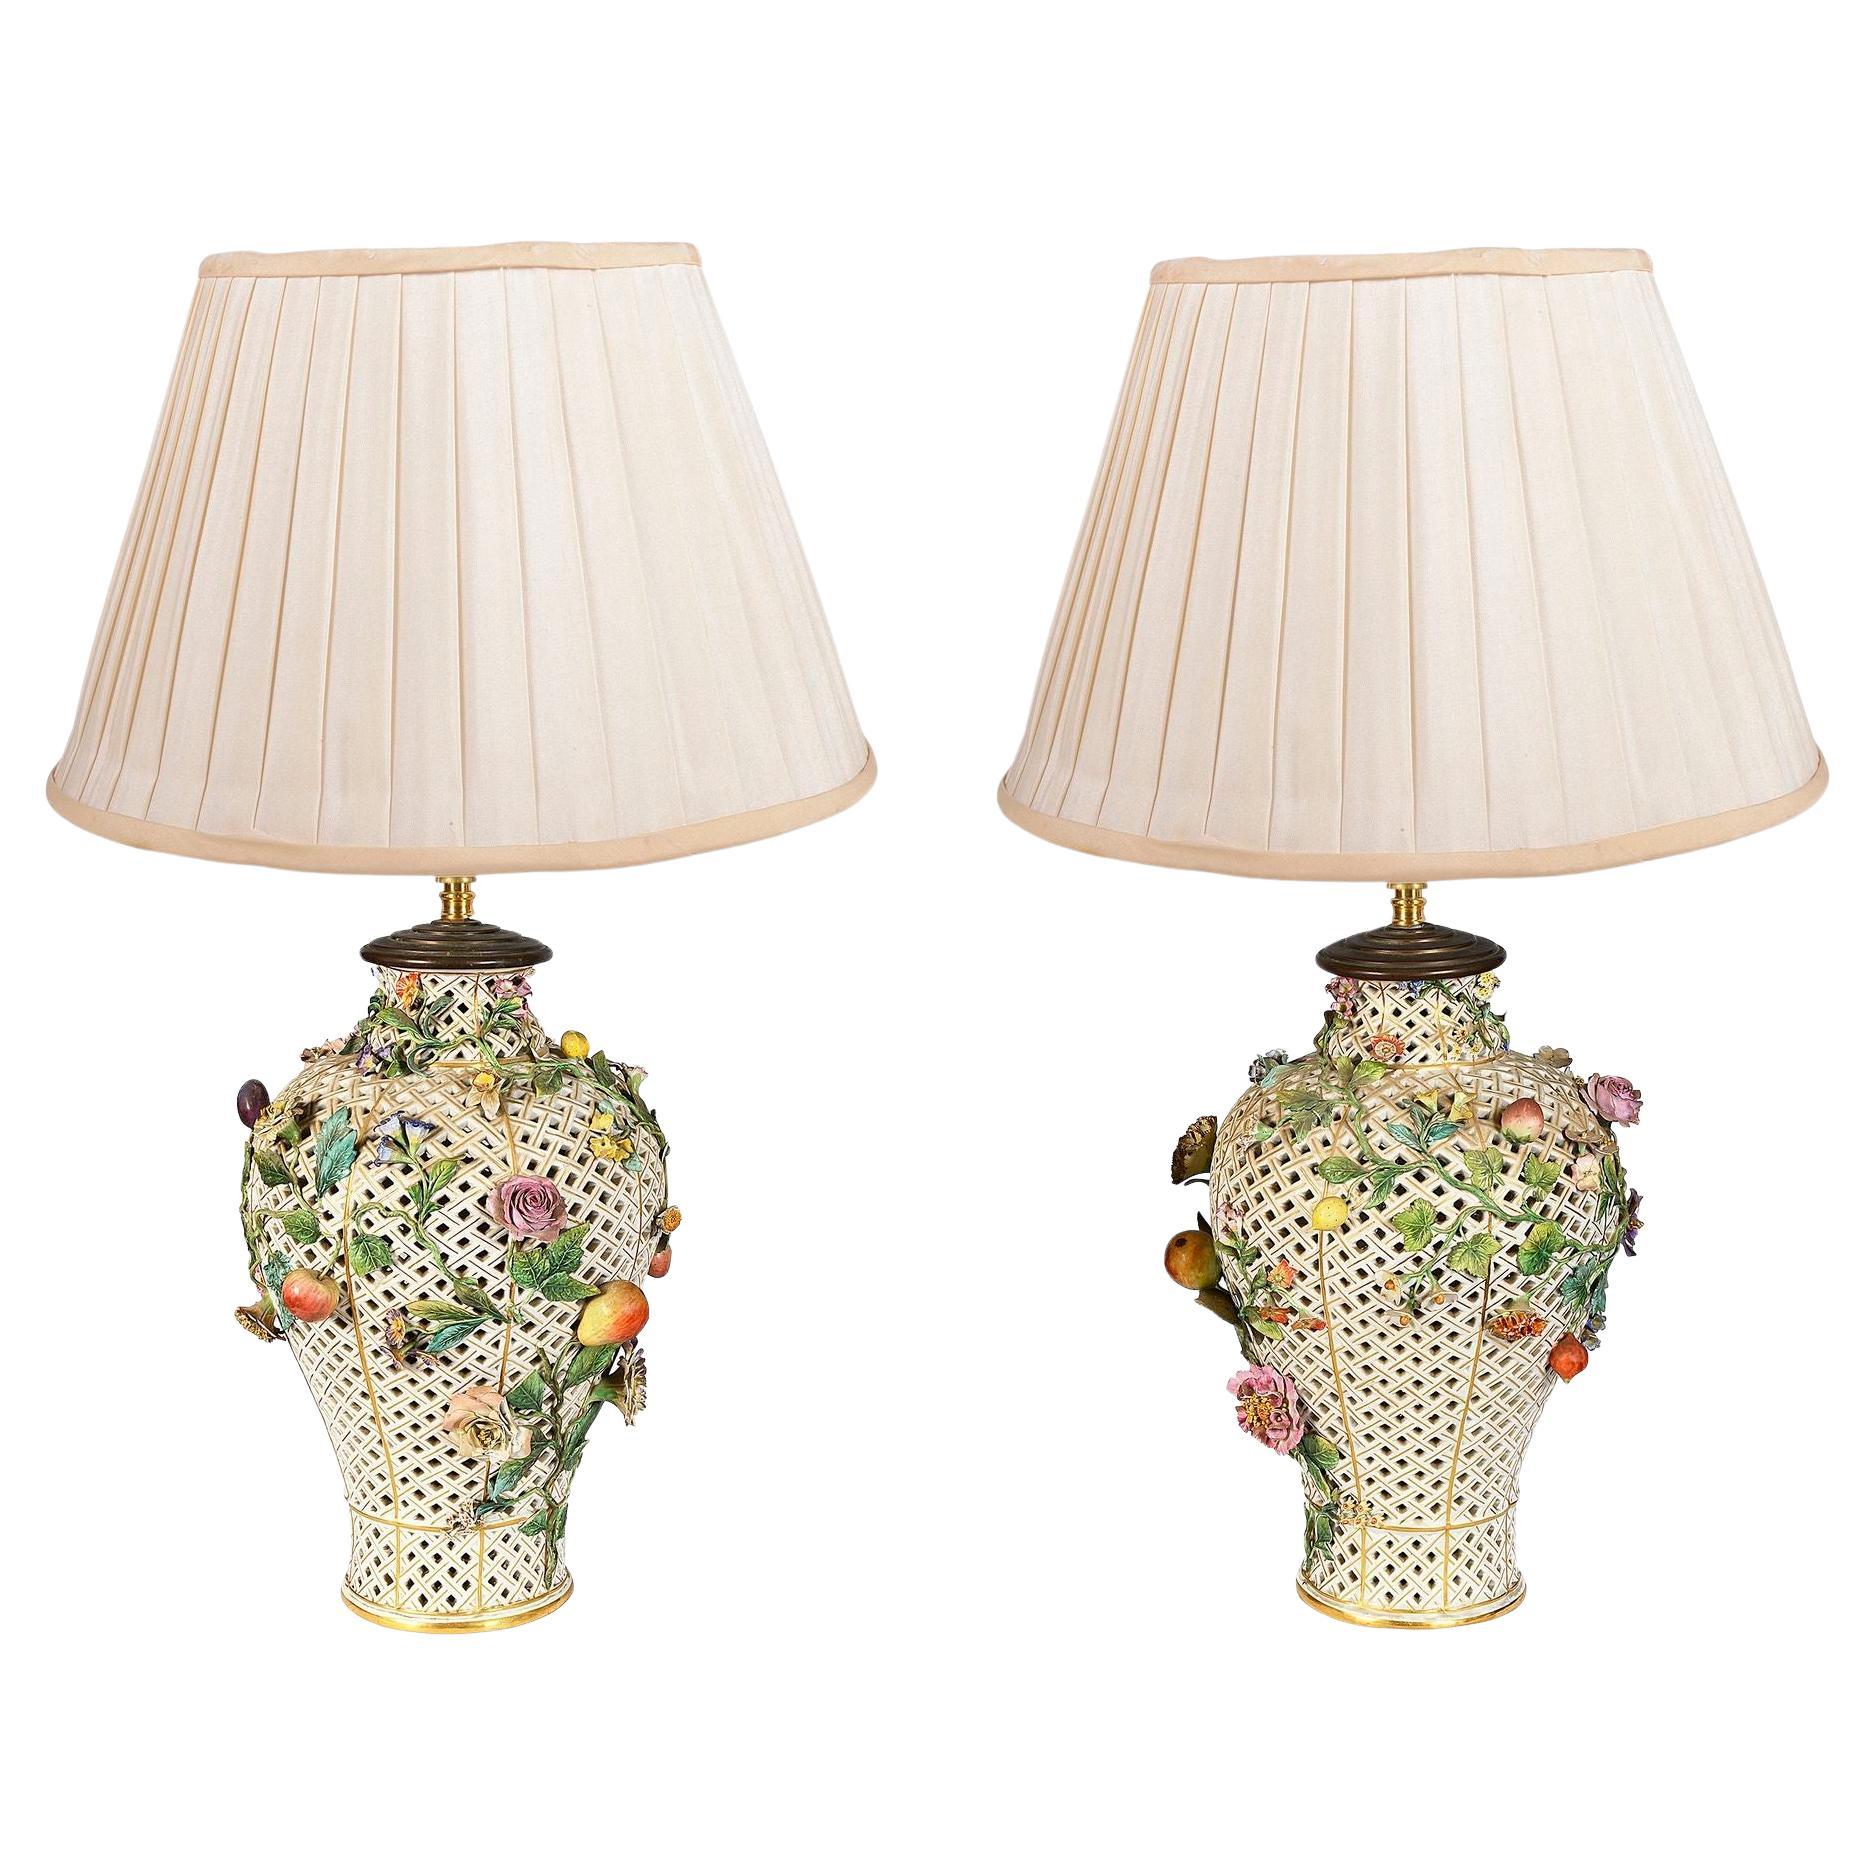 Set of Rococo Style Tole Porcelain Man and Woman Figurative Boudoir Lamps